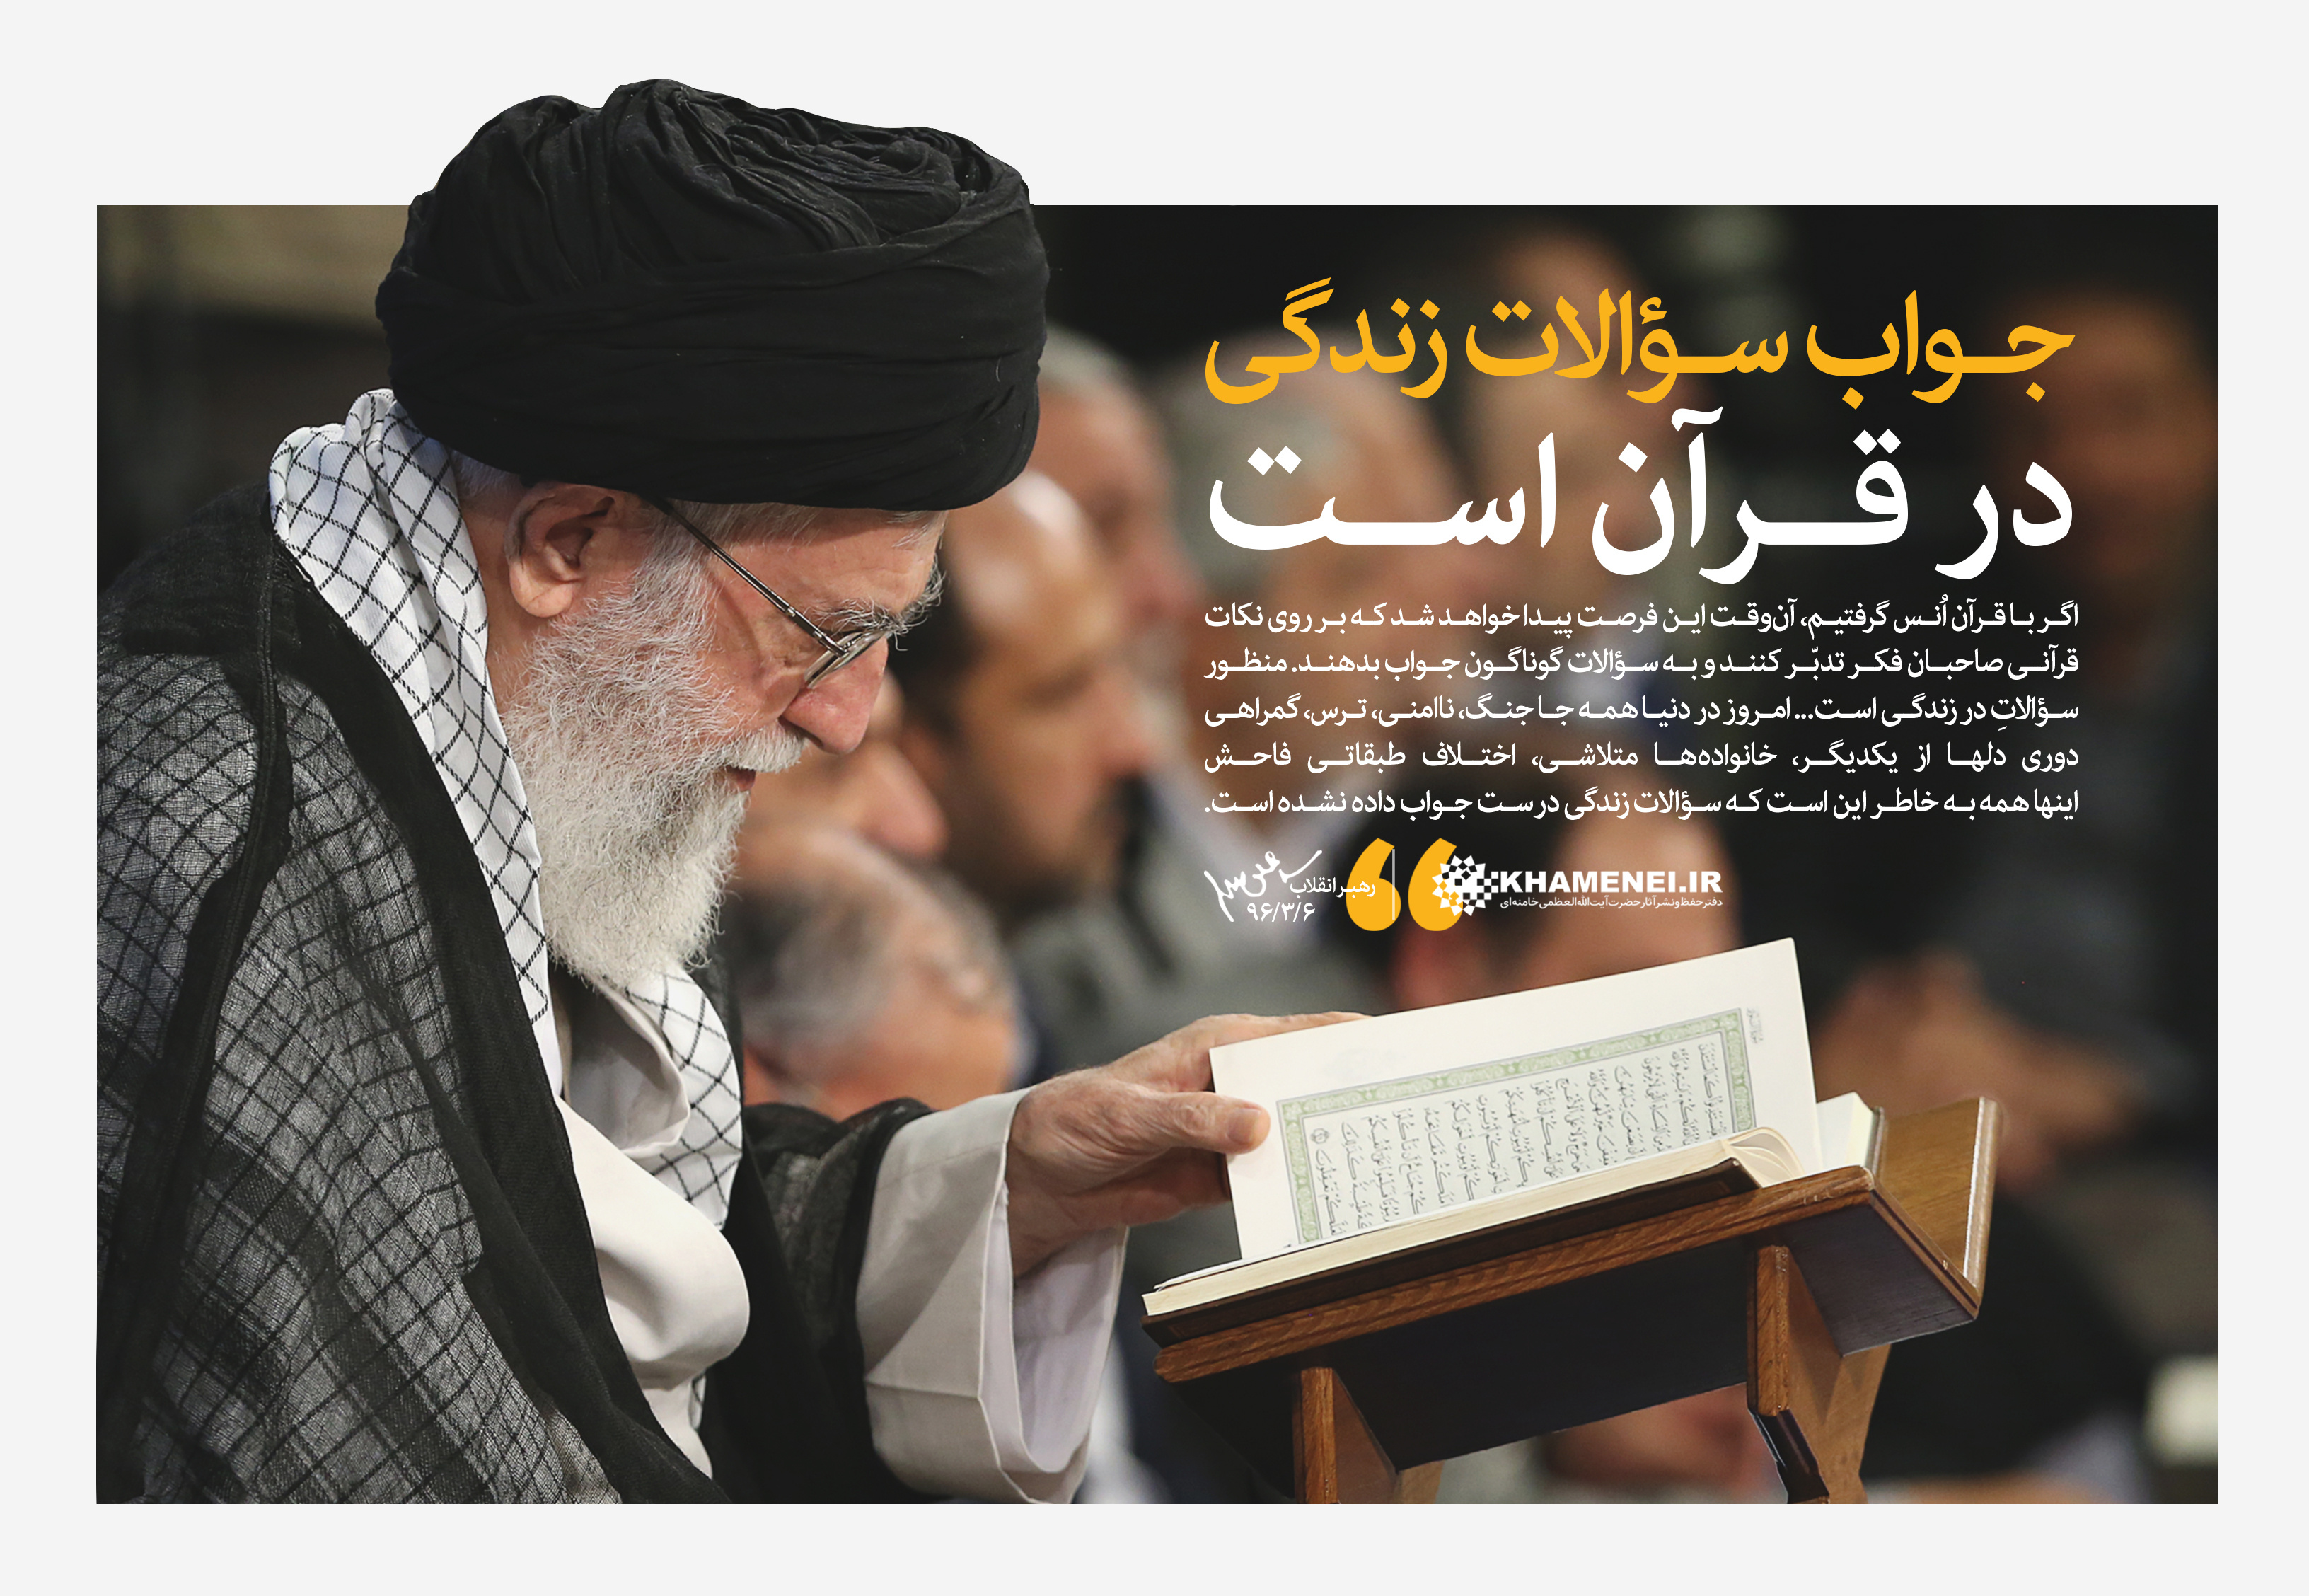 http://idc0-cdn0.khamenei.ir/ndata/news/36665/B/13960306_0336665.jpg